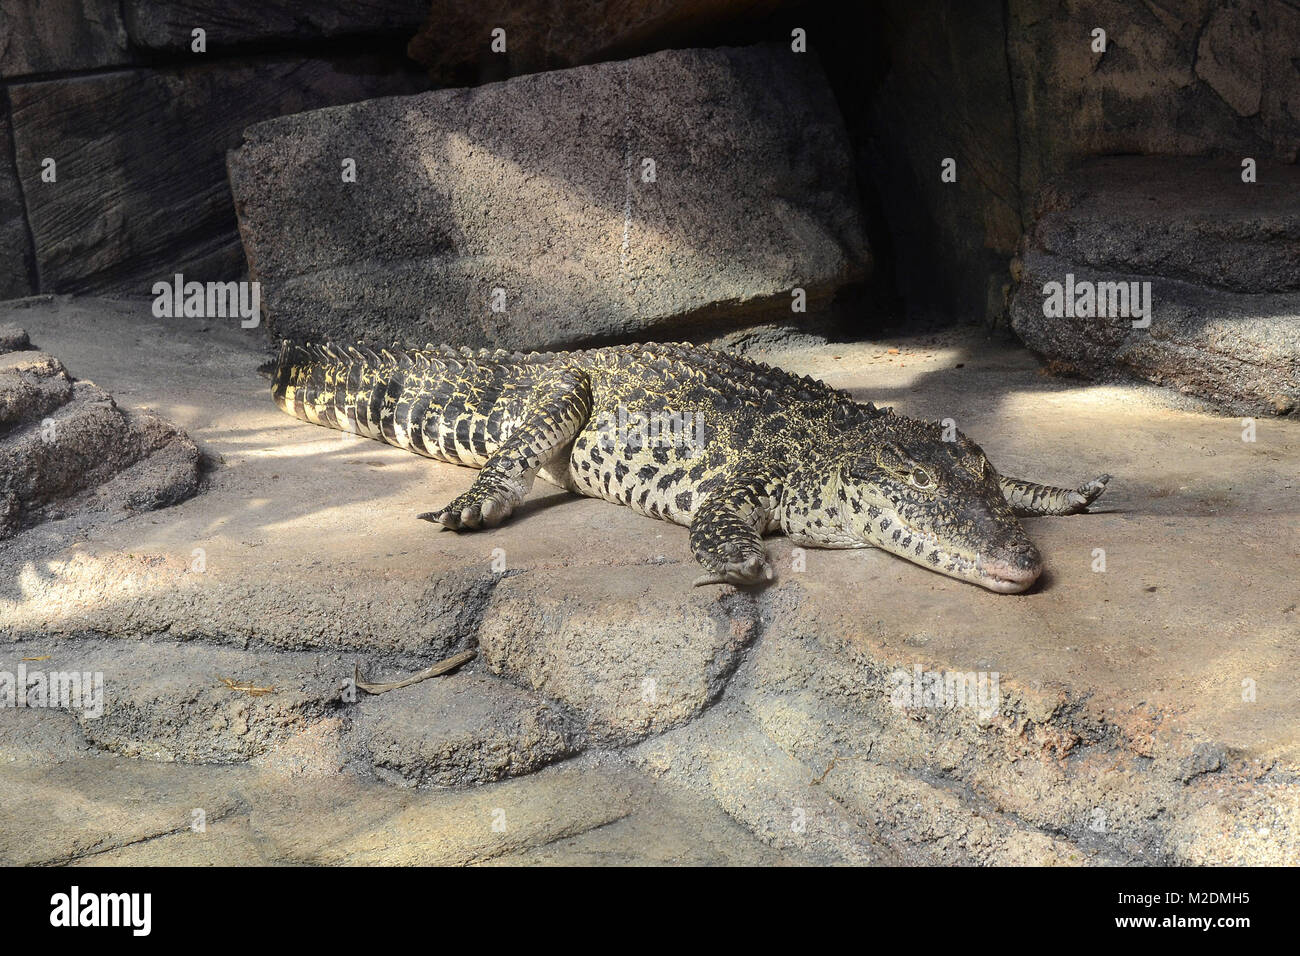 Neuzugang: Das acuario Sea Life en Hannover praesentiert zwei Kuba-Krokodile am 13.04.2012 Foto de stock